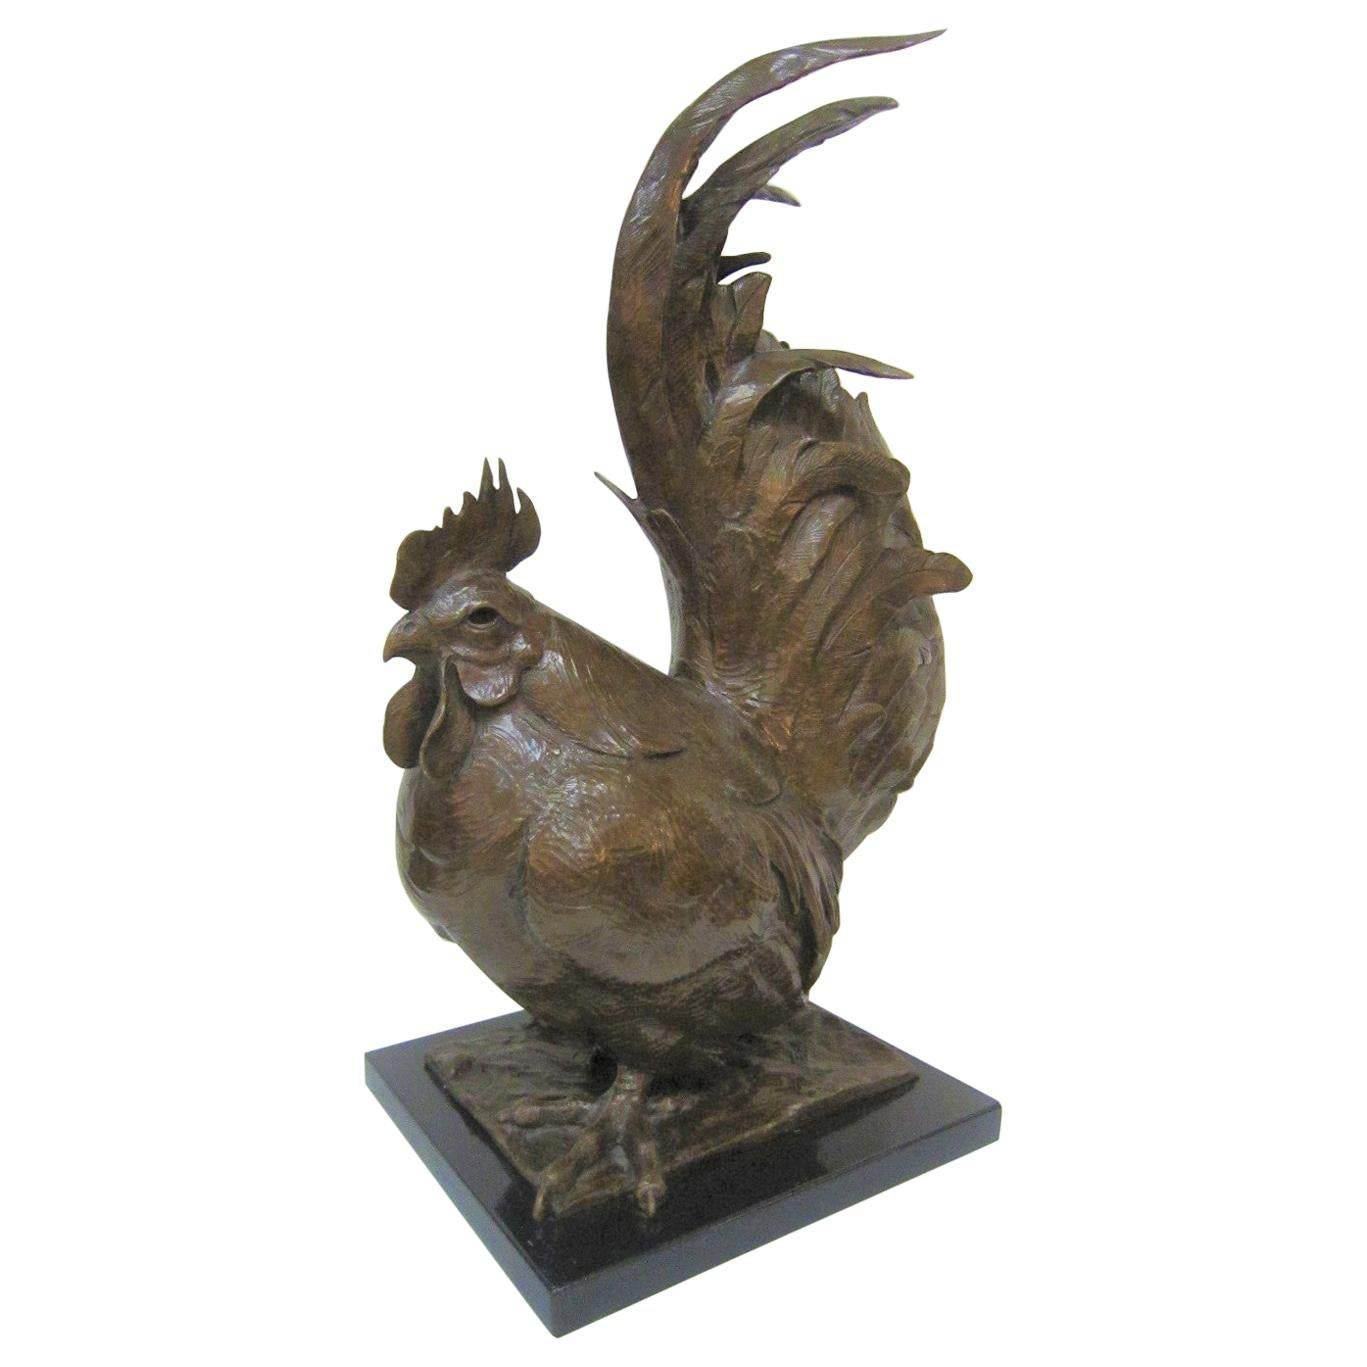 American Original Bronze Sculpture of a Rooster by Dan Ostermiller